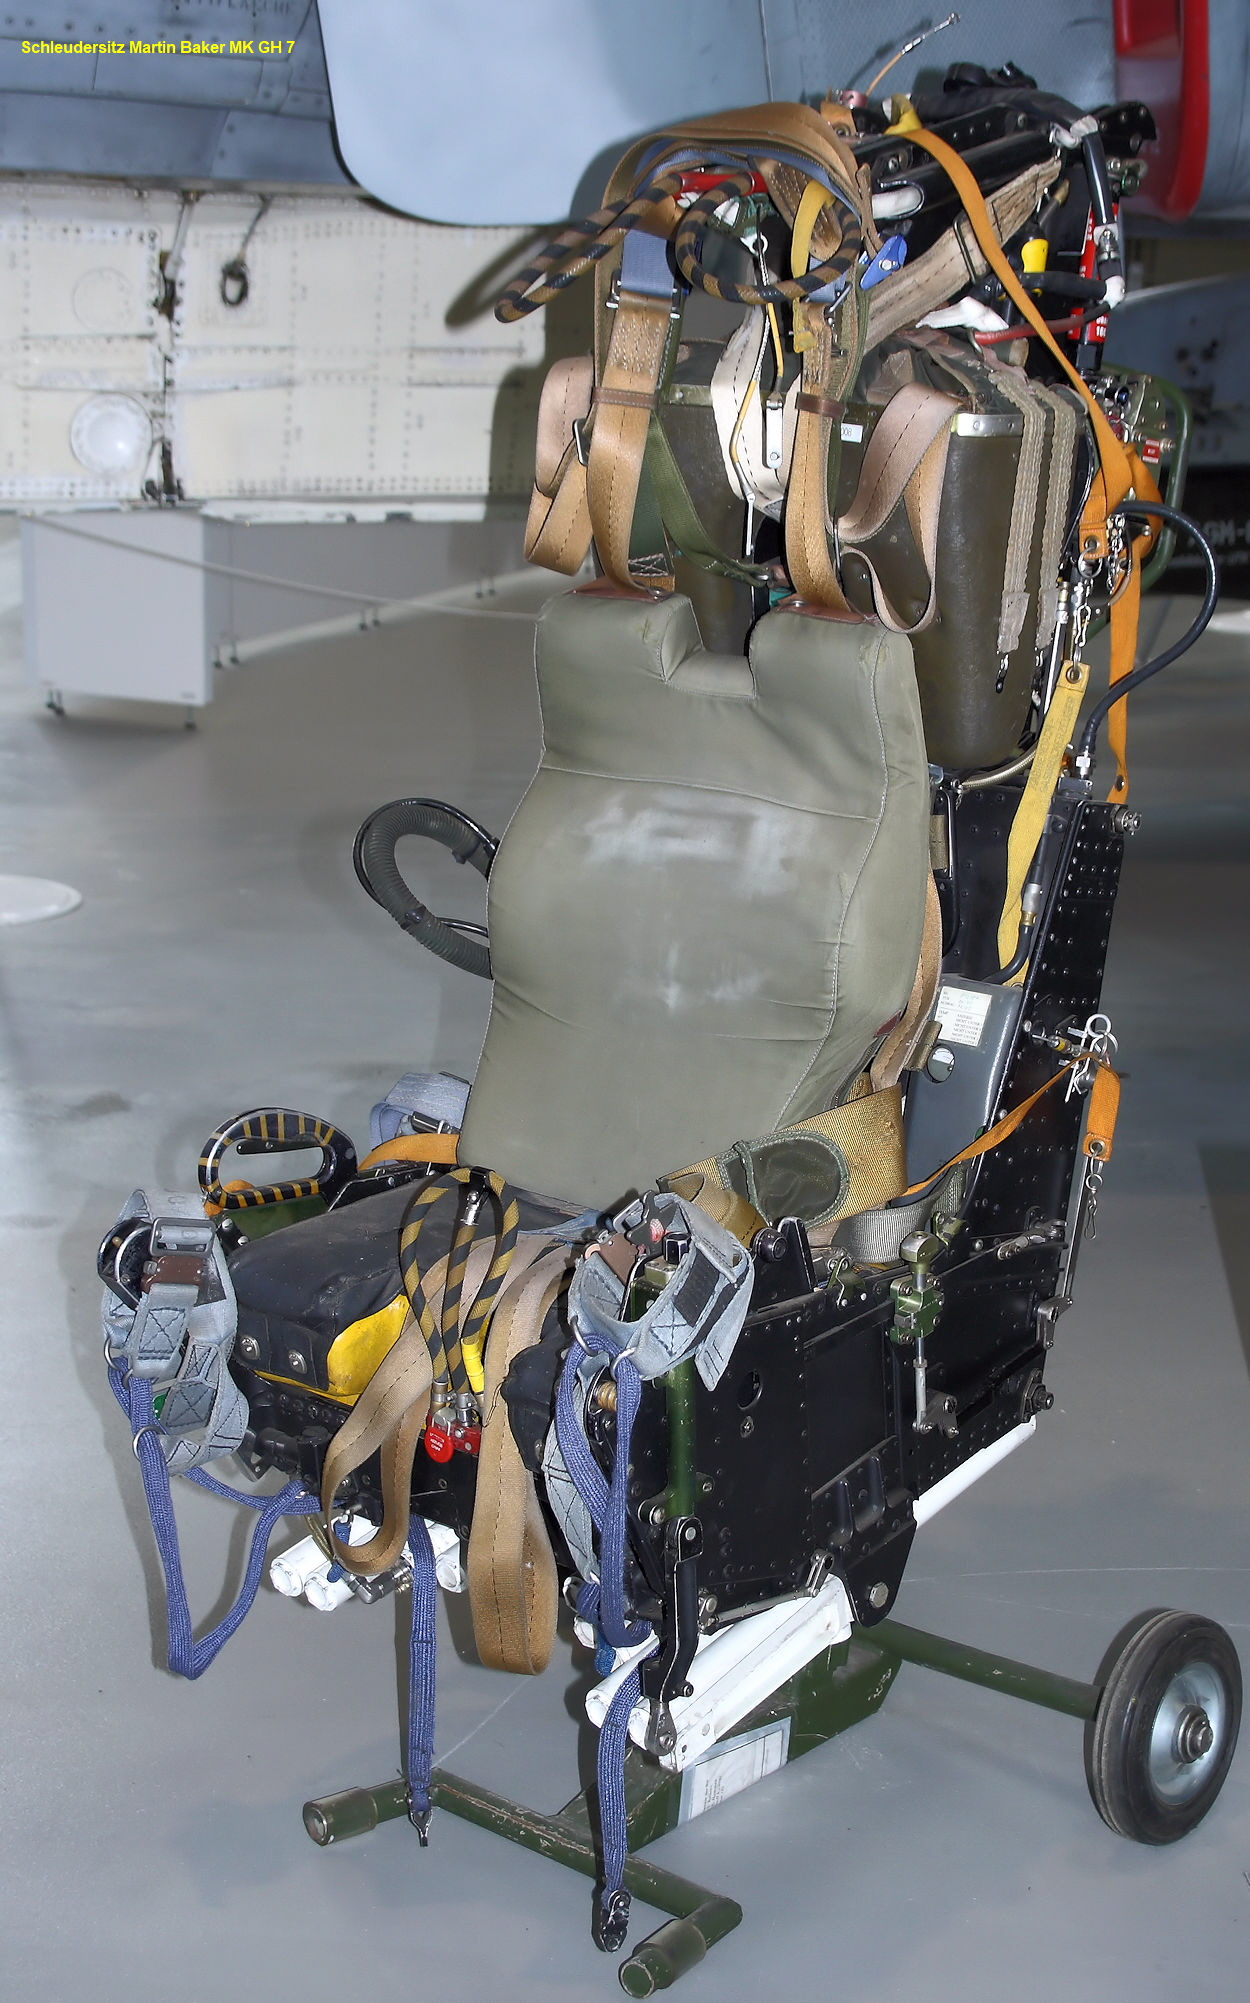 Schleudersitz Martin Baker MK GH 7 -   Rettungssystem der Phantom F-4F